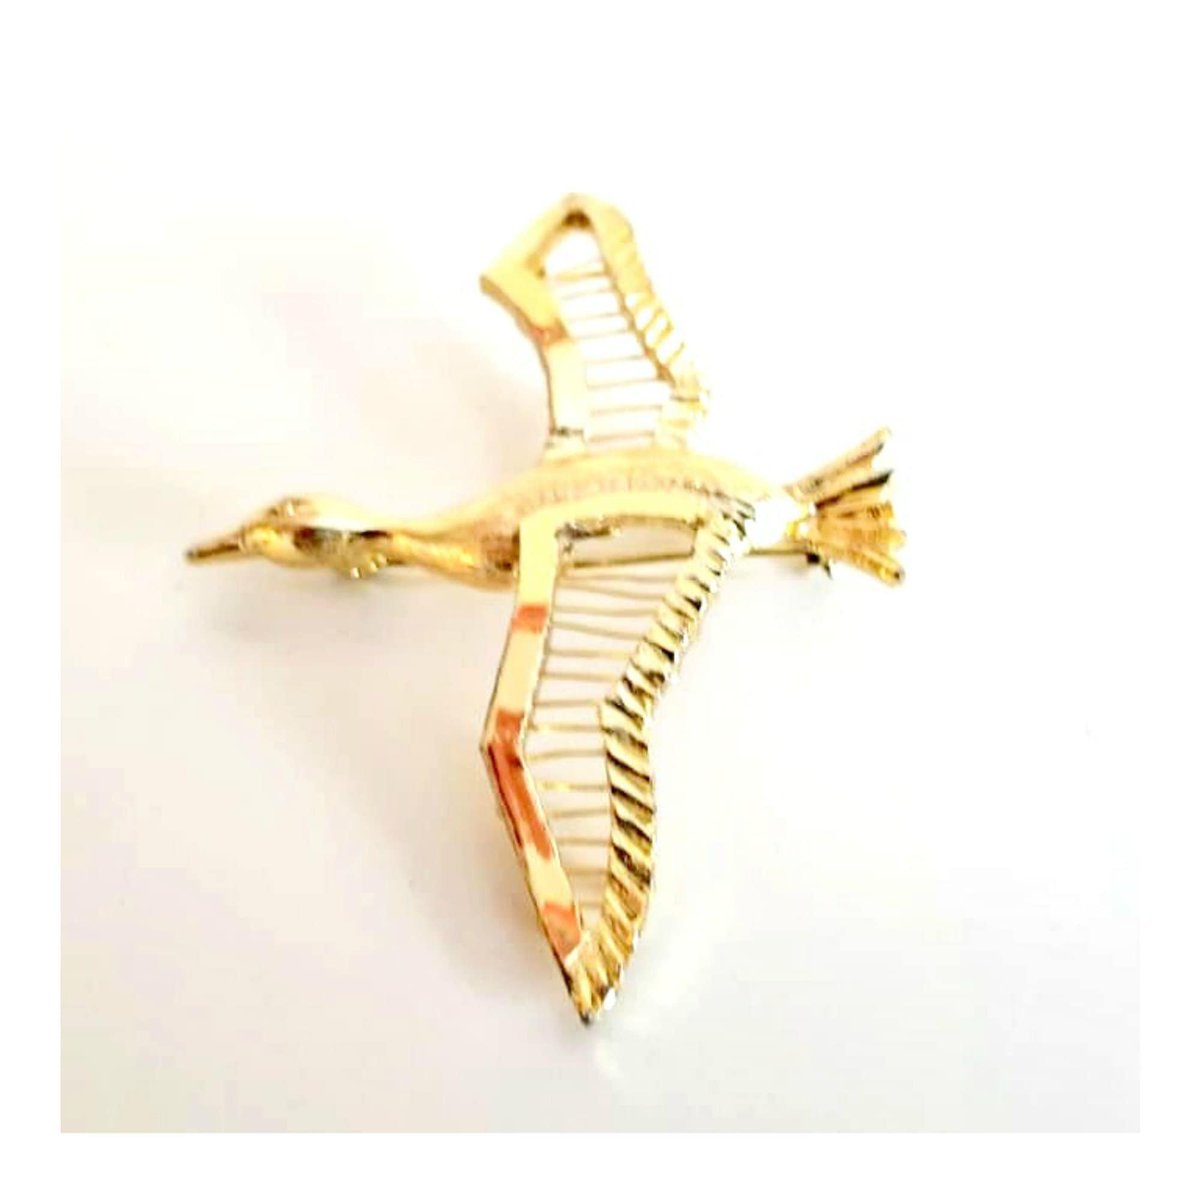 Gold Open Work Bird  Brooch, Seagull Brooch, Free Shipping tuppu.net/91a1f645 #Etsy #JunkYardBlonde #GoldFiligree